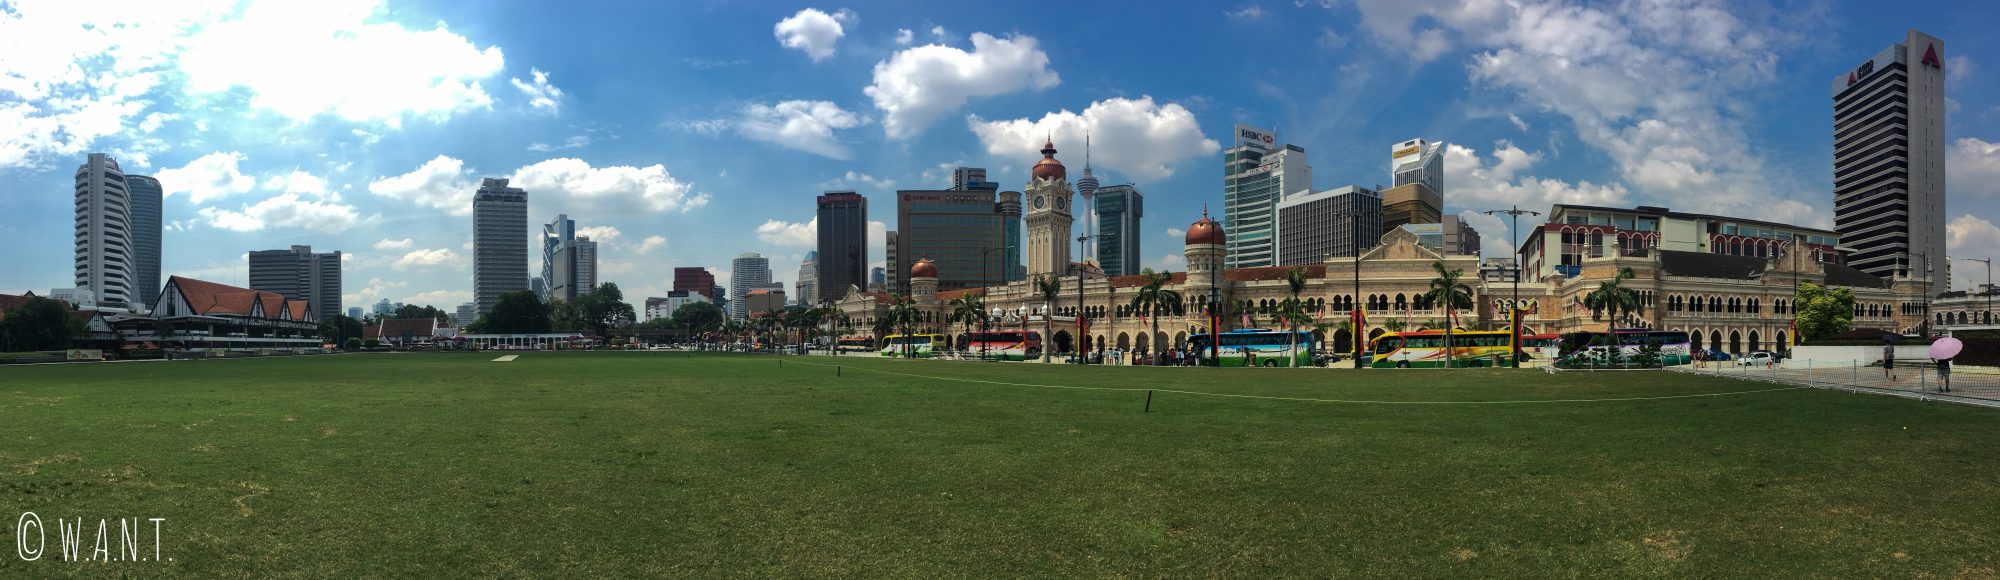 Panorama de Merdeka Square à Kuala Lumpur